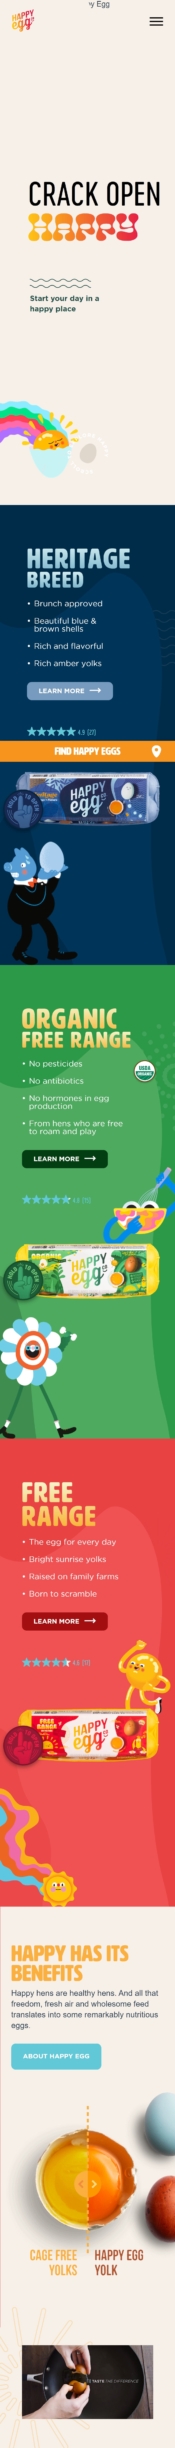 Happy egg food & drink animation